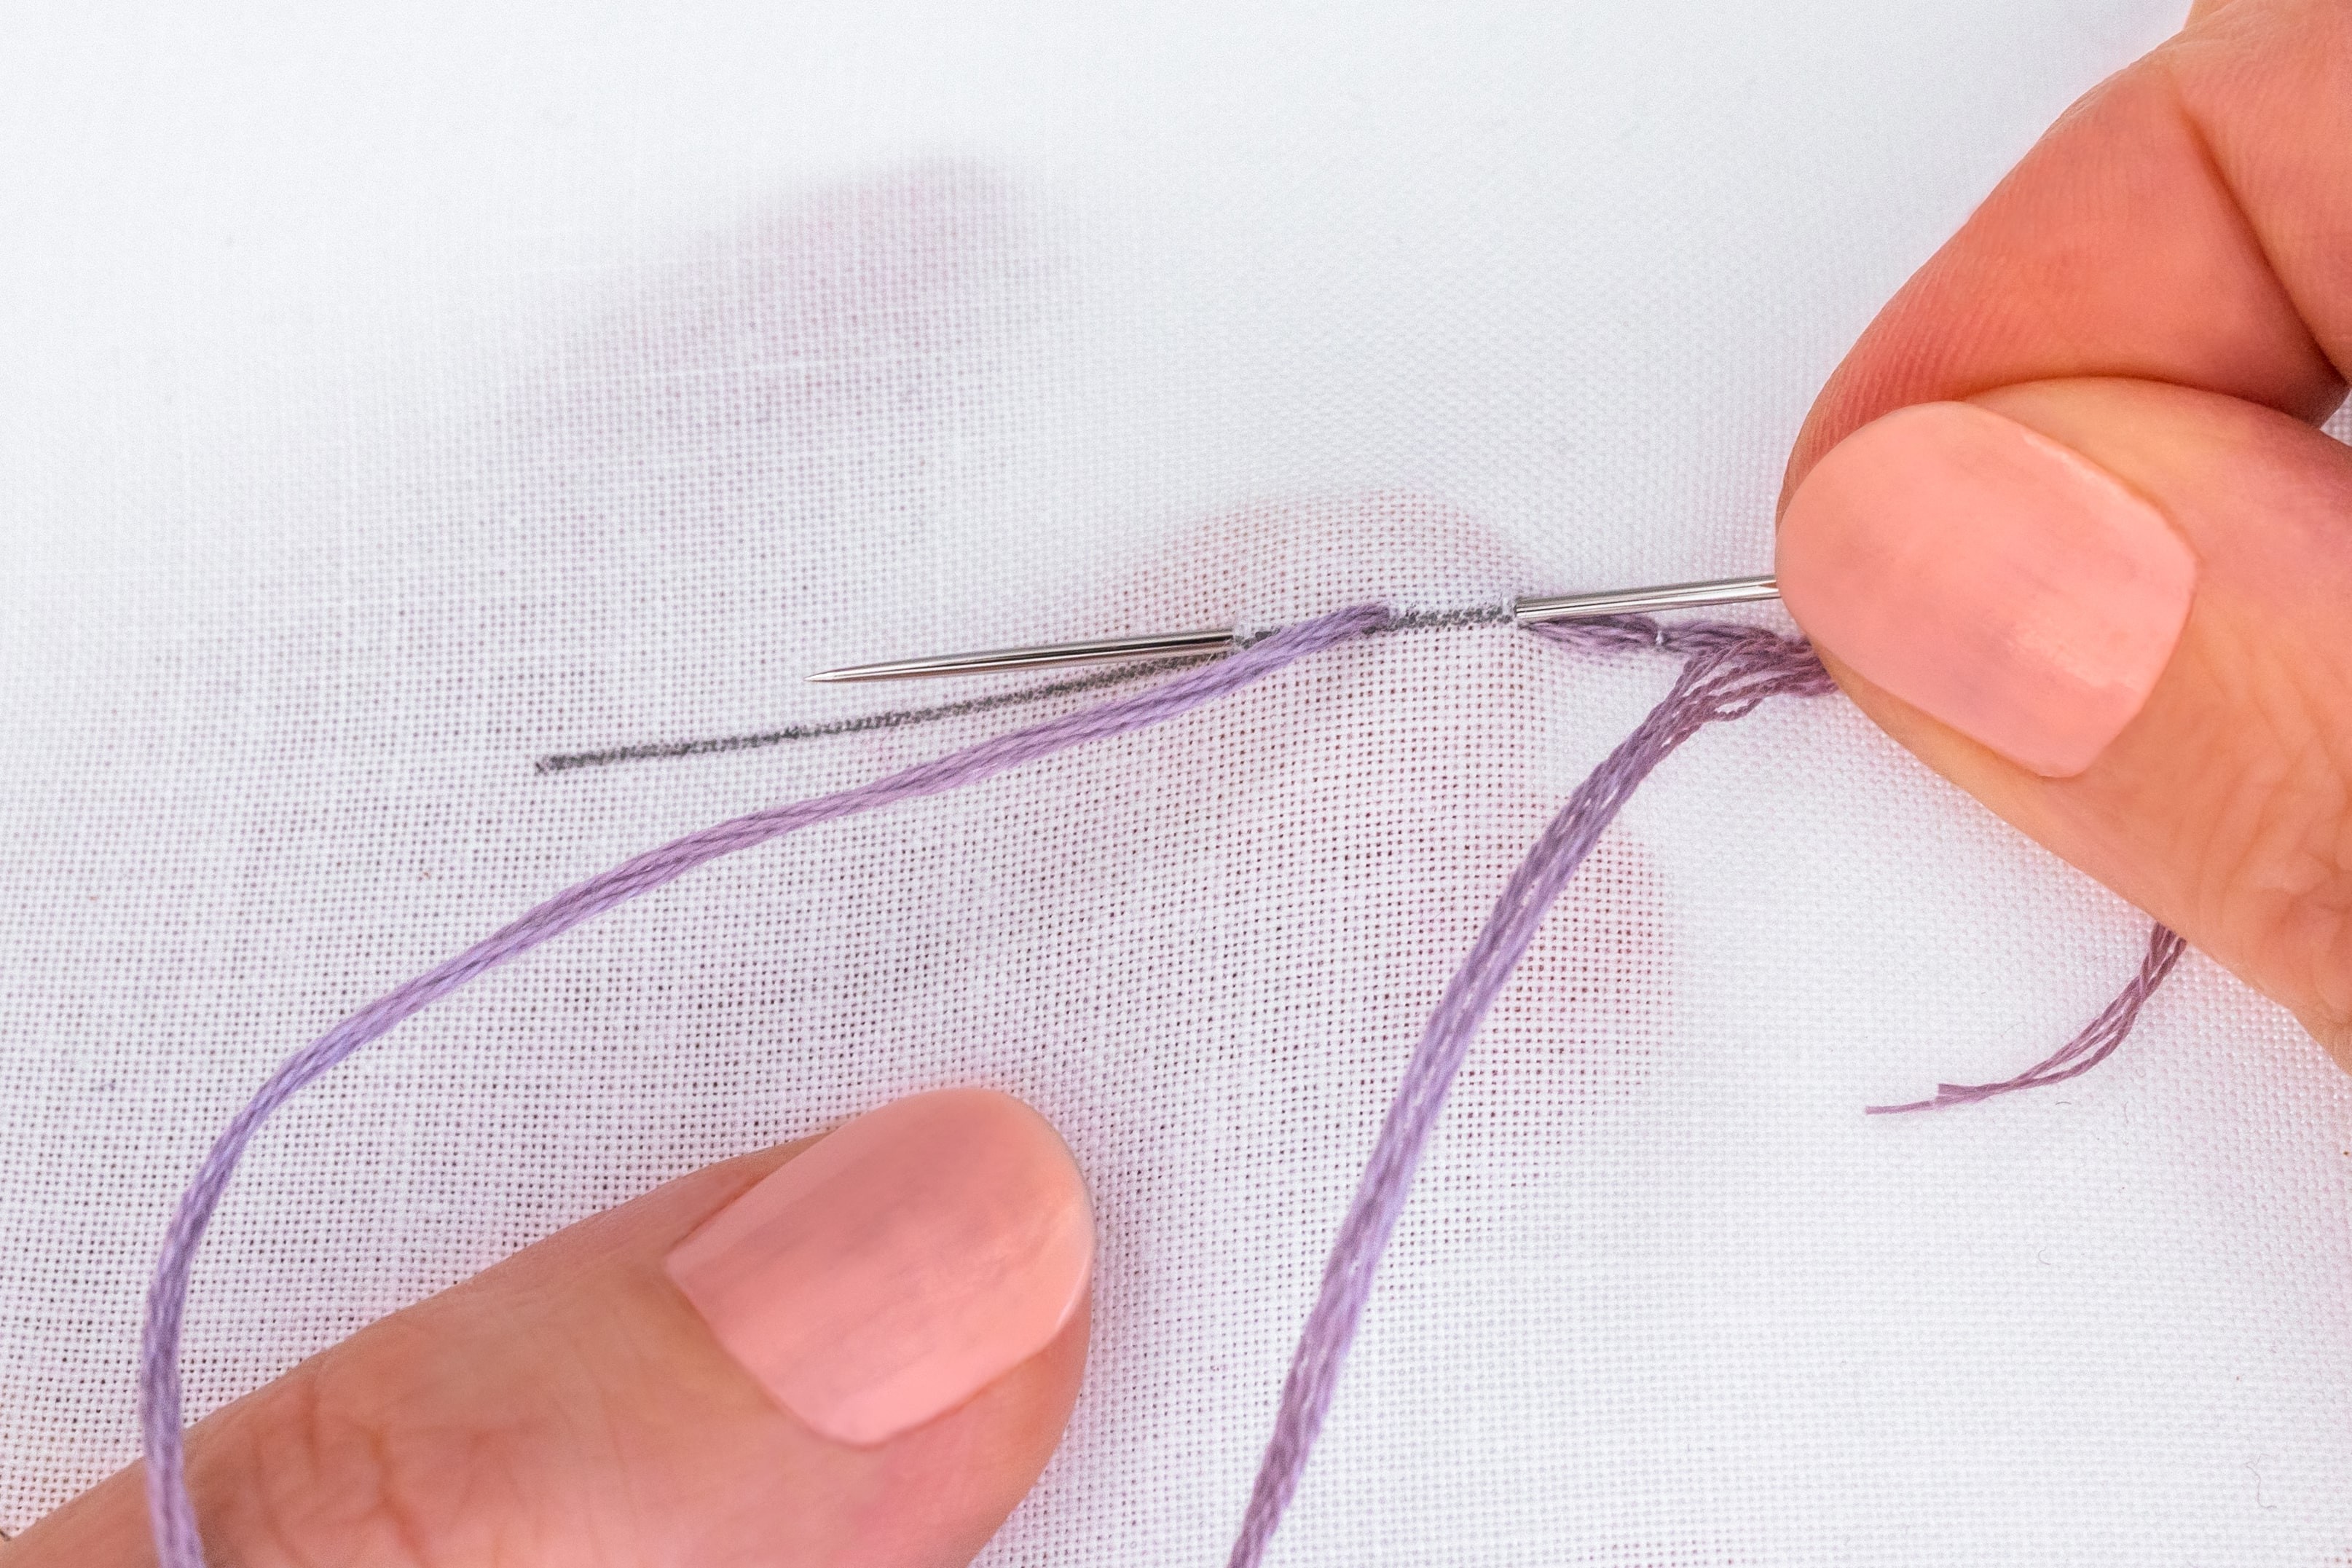 A hand sews a stitch in a line, creating a loop.